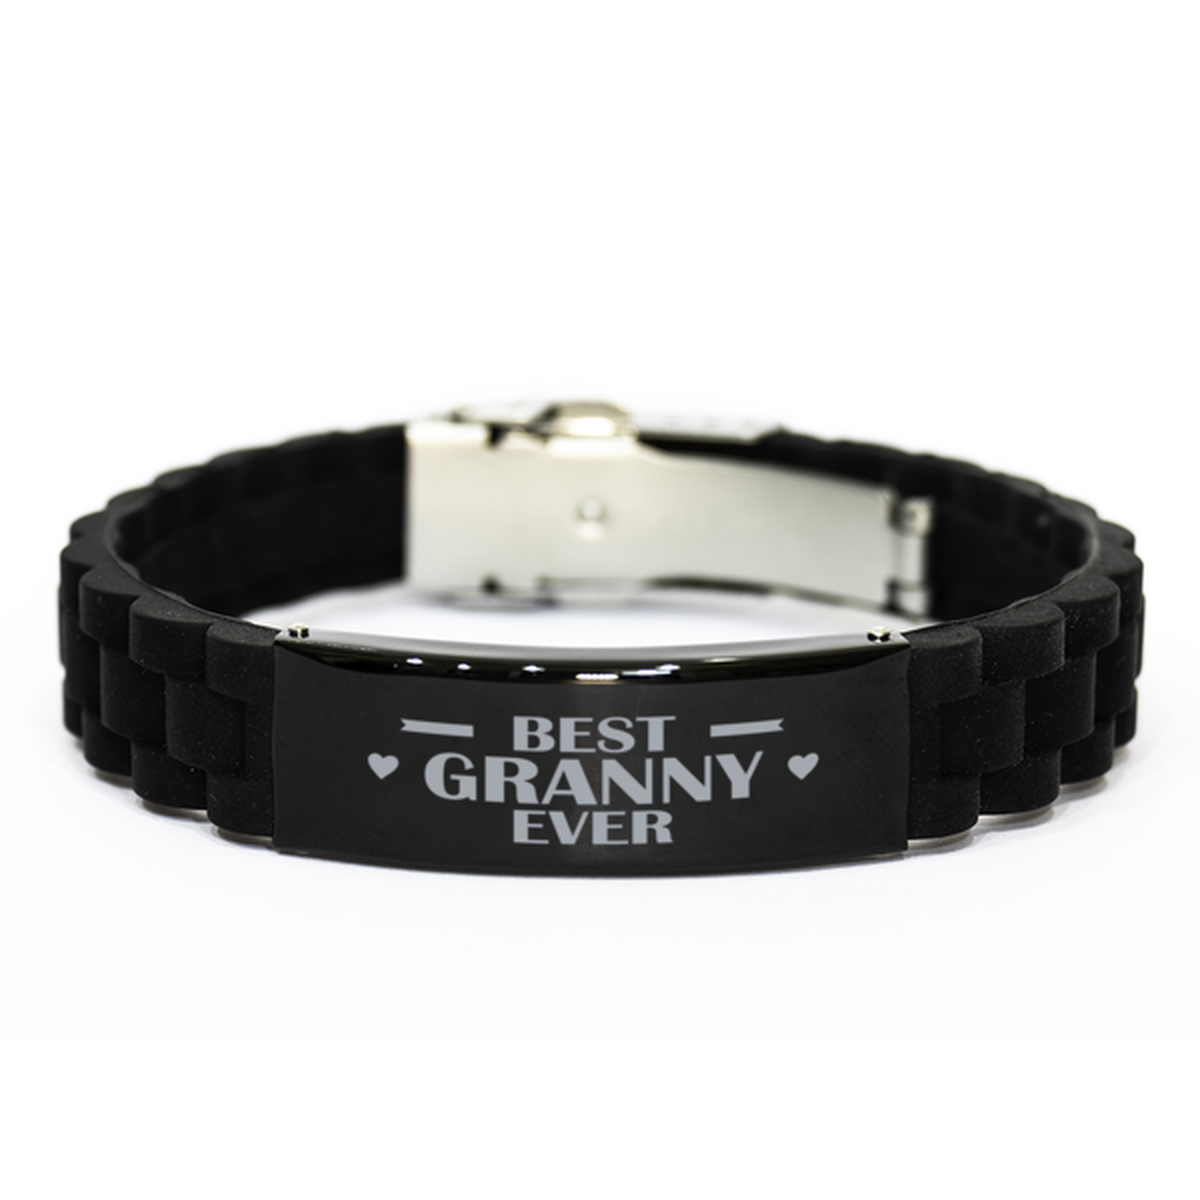 Best Granny Ever Granny Gifts, Funny Black Engraved Bracelet For Granny, Family Gifts For Women